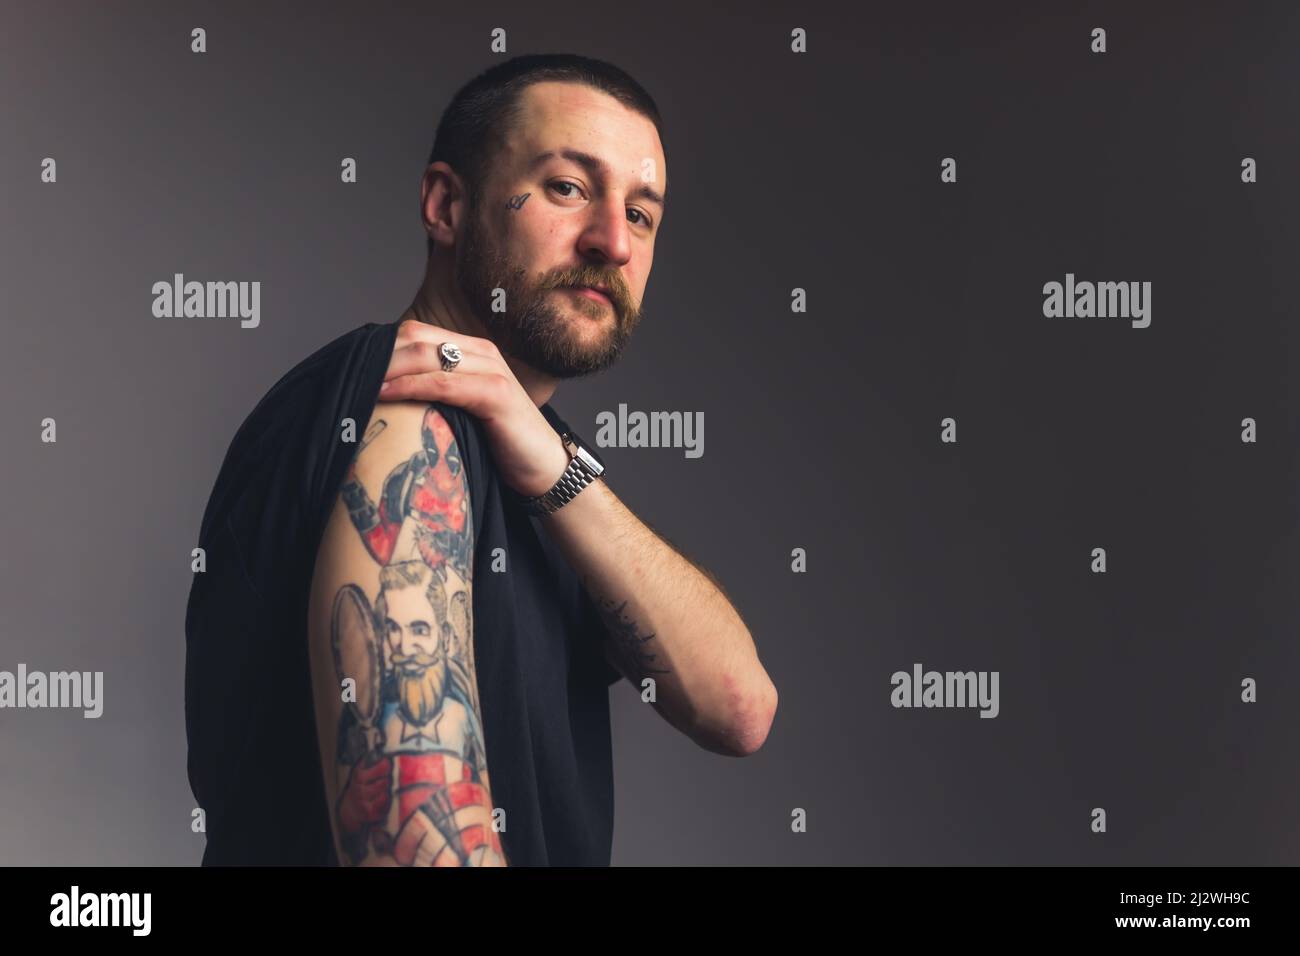 Manga de tatuajes fotografías e imágenes de alta resolución - Alamy